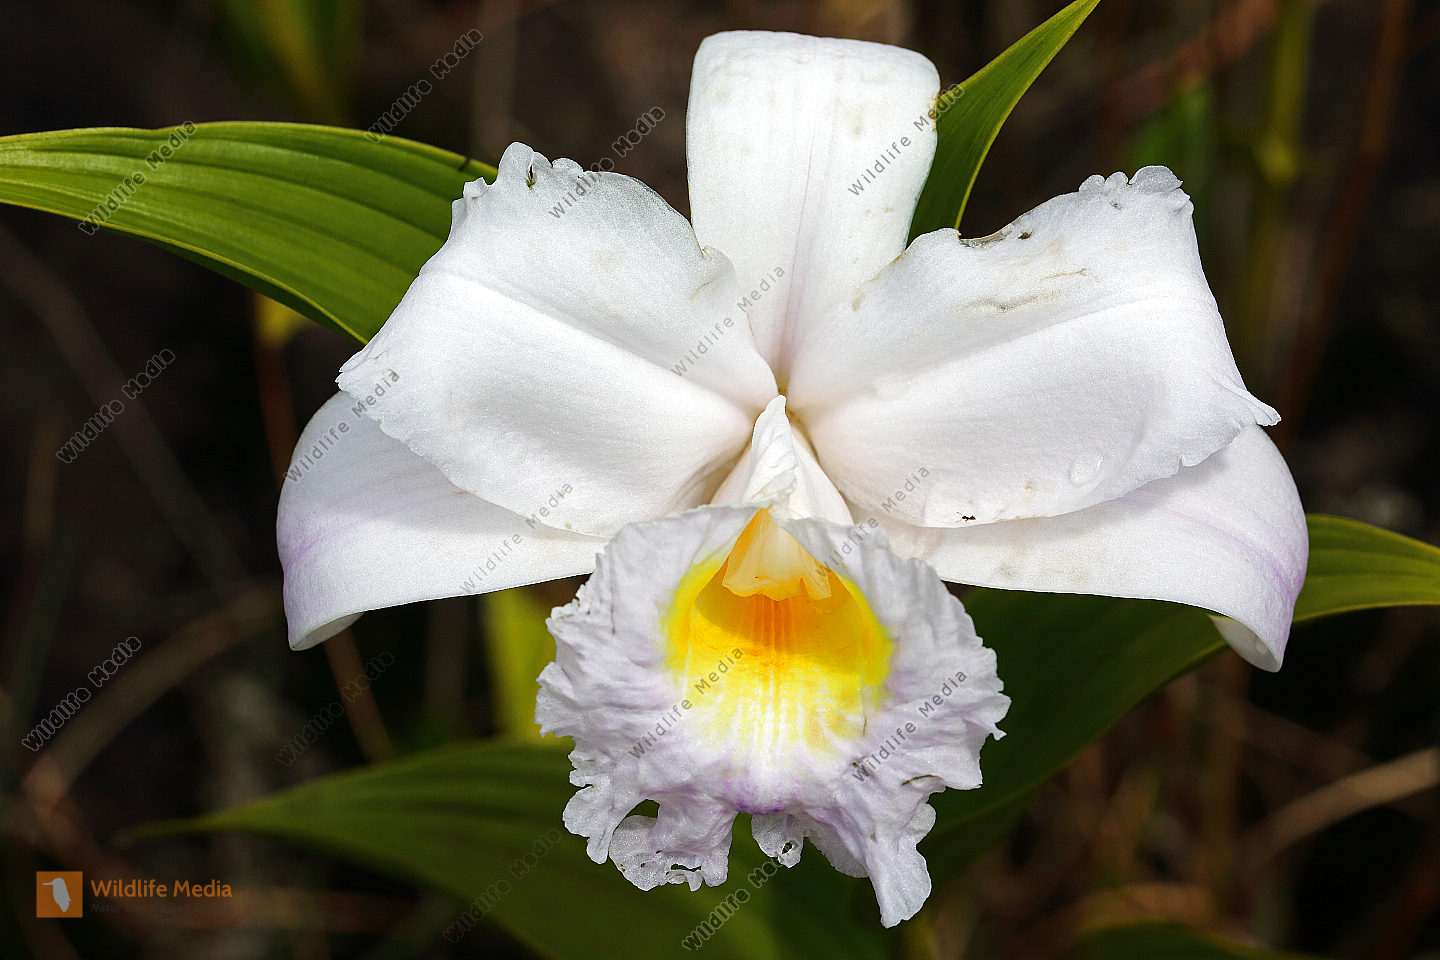 Sobralia-Orchidee